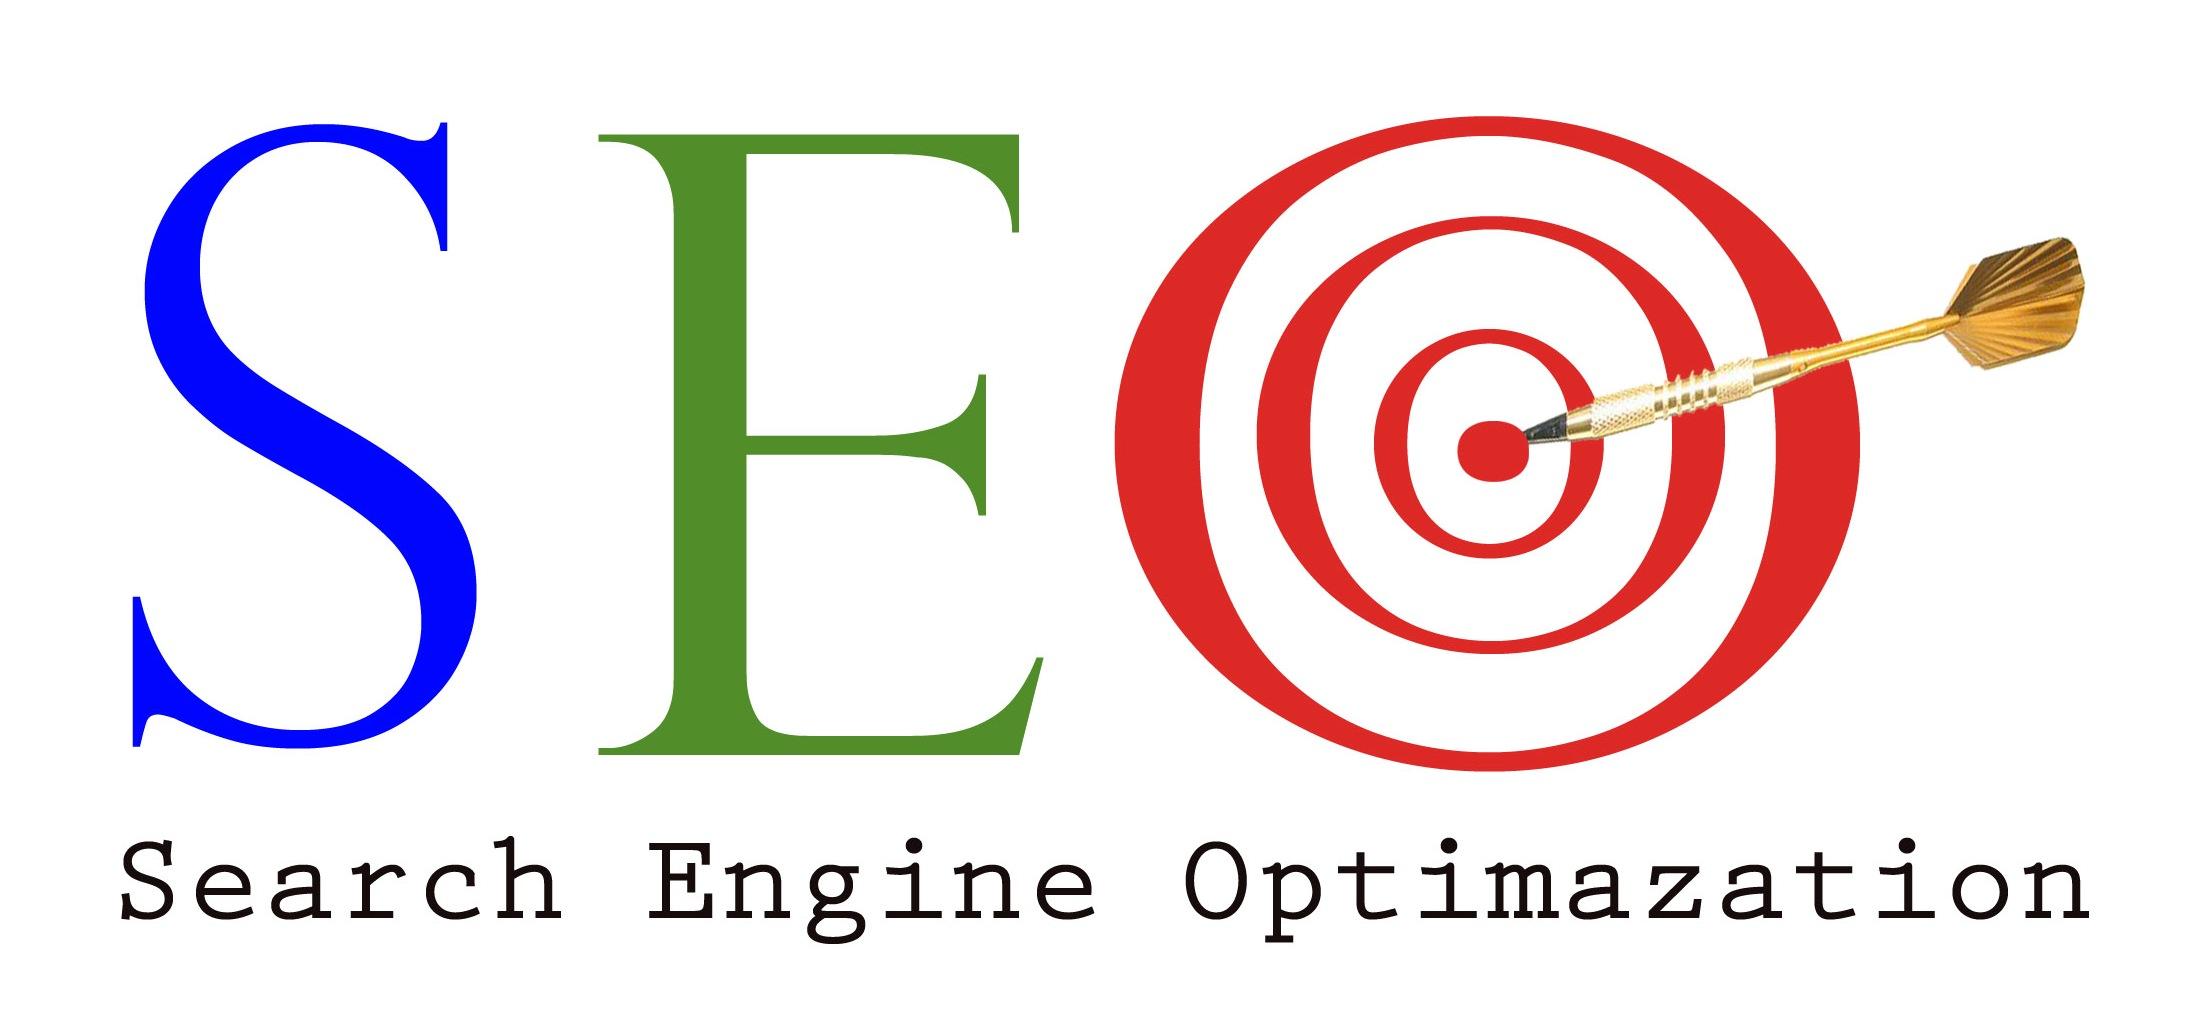 SEO Logo - Web Development Chennai|Web Design Company|SEO|SEM|Logo Design